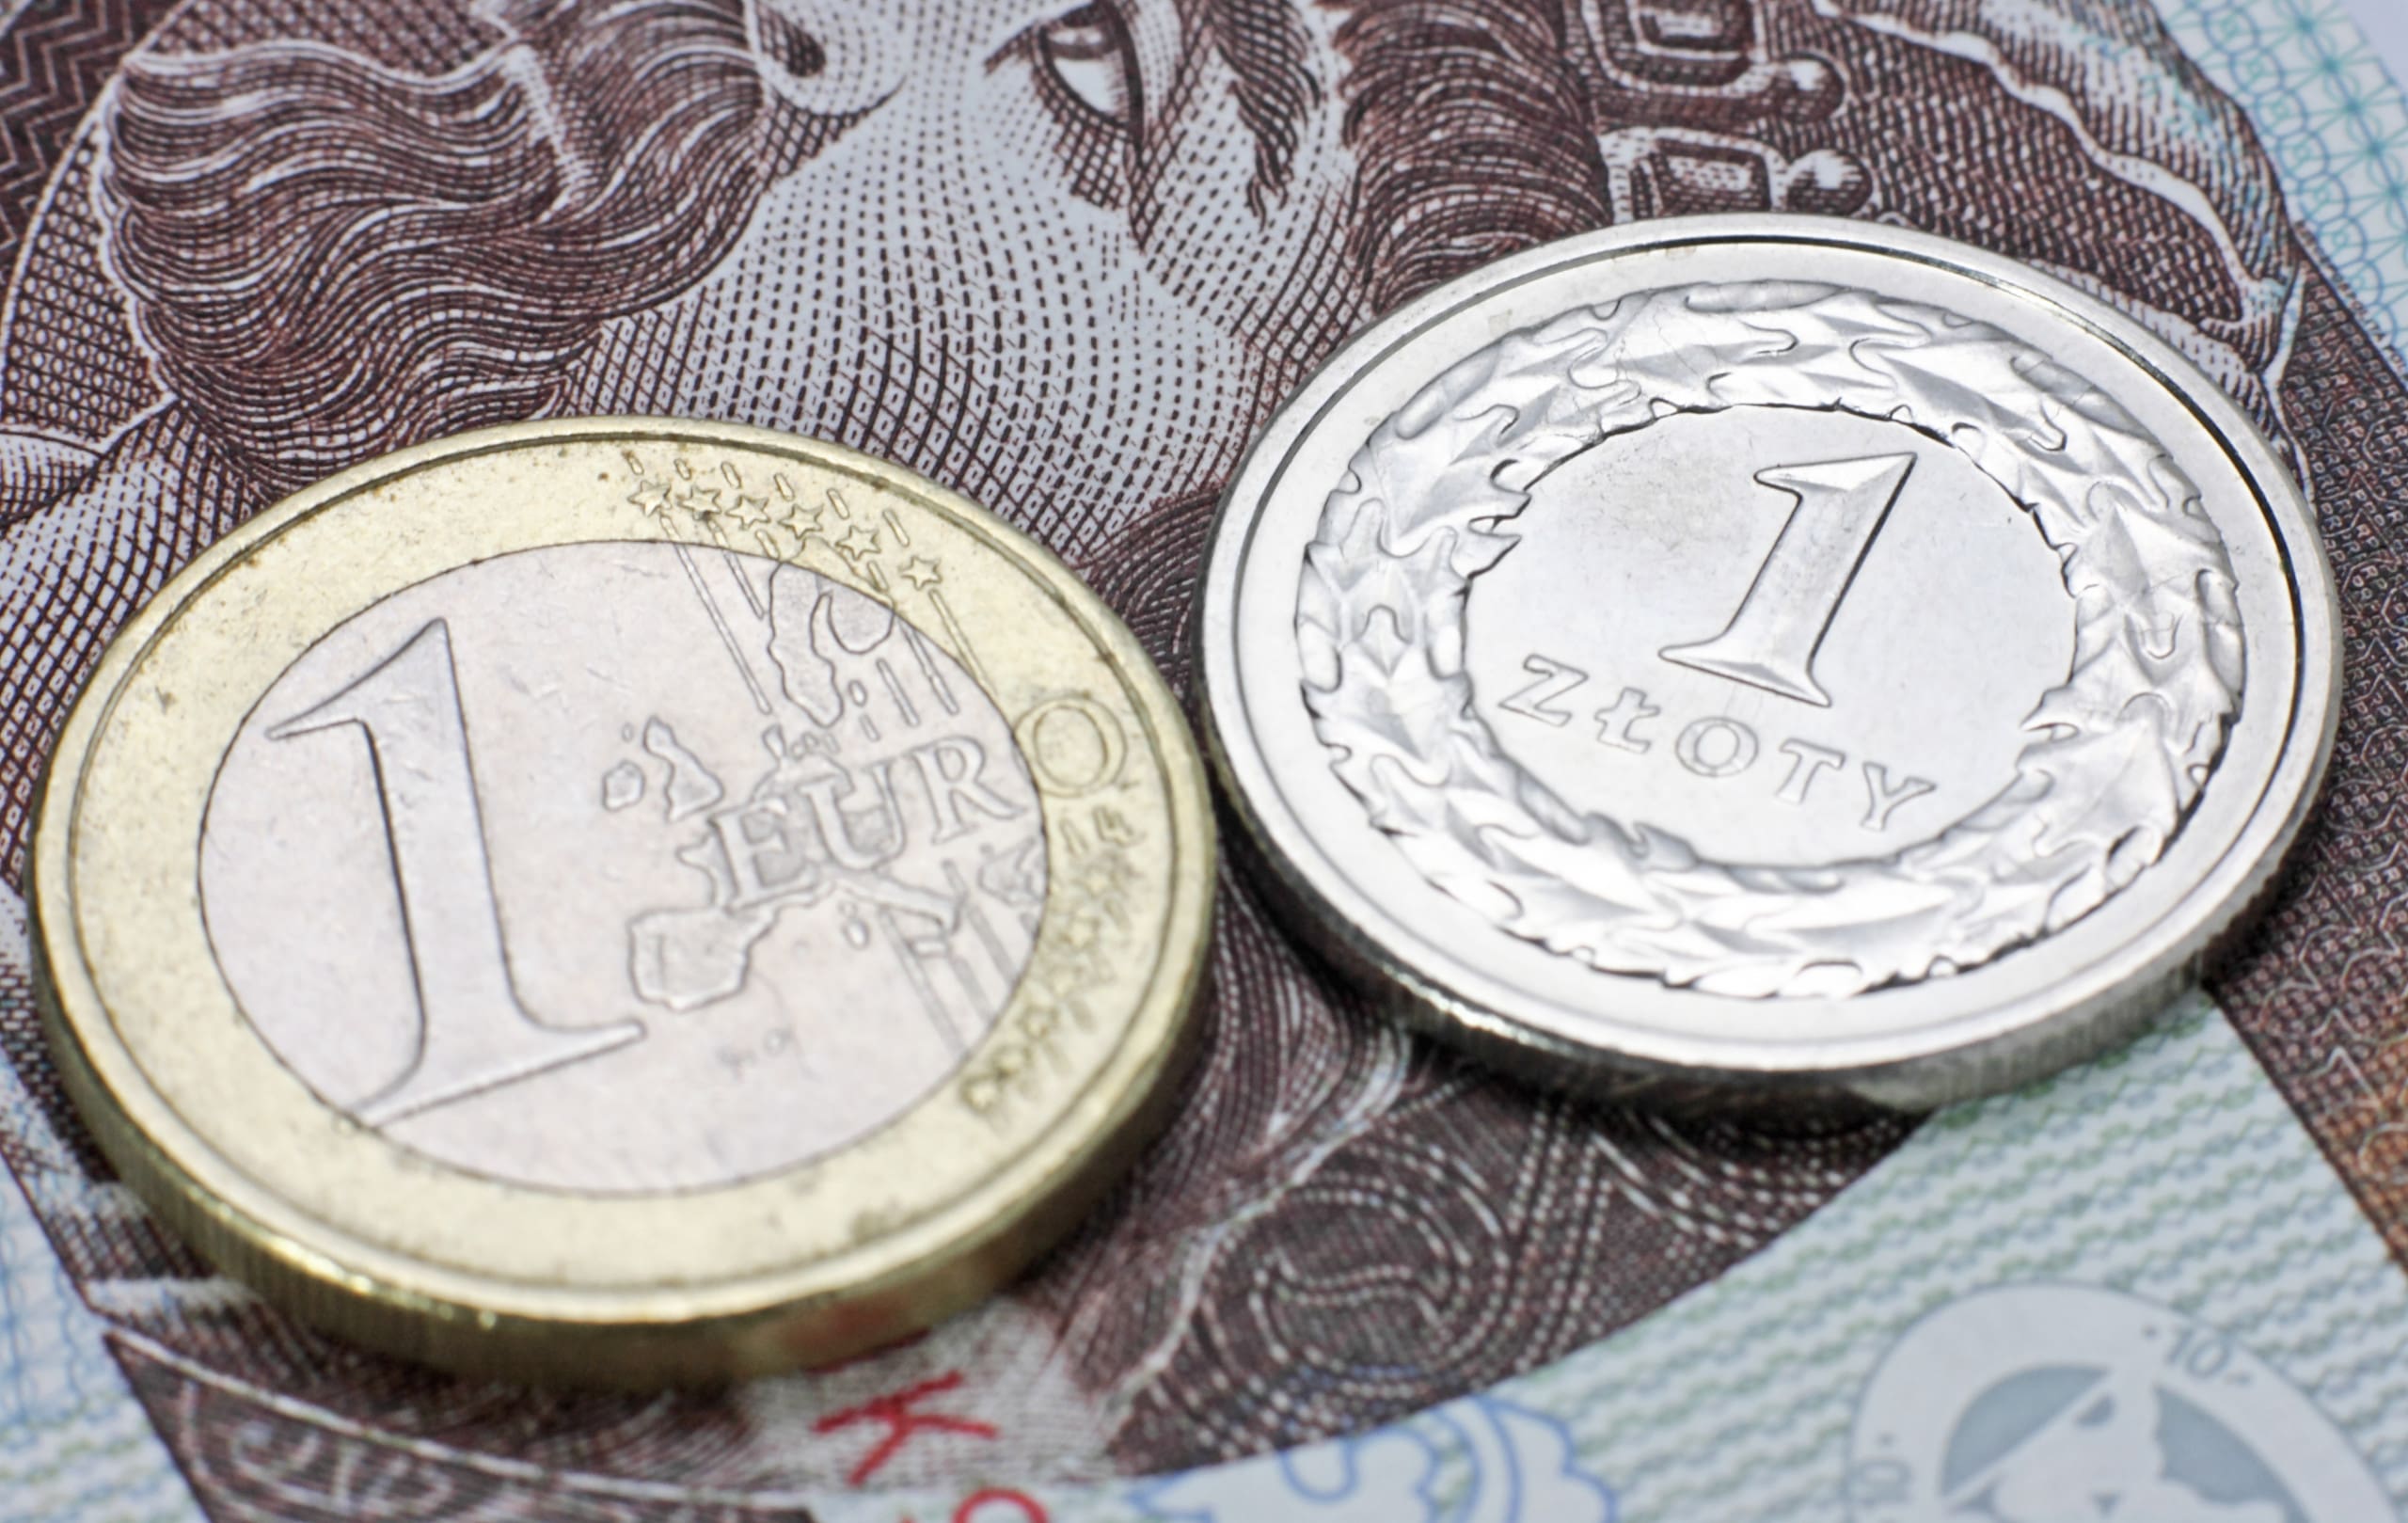 Poland under pressure to join Euro zone